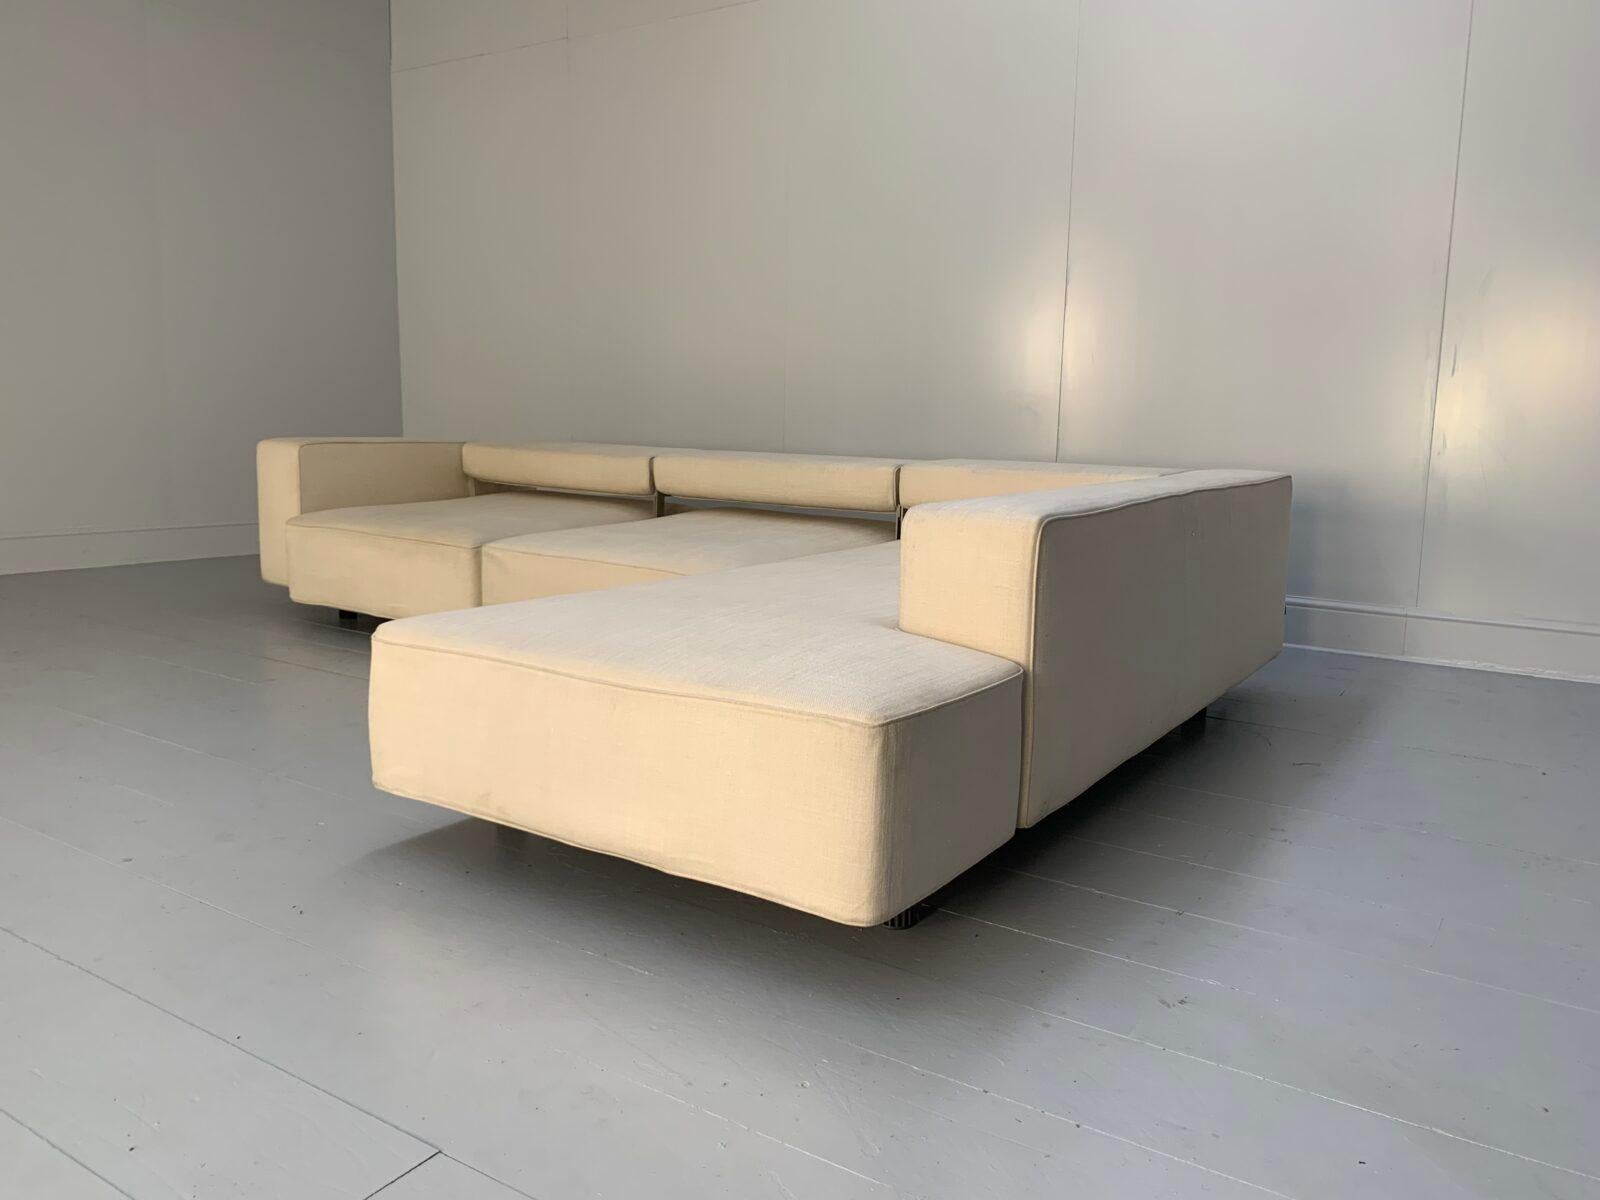 B&B Italia “Andy '13” L-Shape Sofa - In Neutral Fabric In Good Condition For Sale In Barrowford, GB